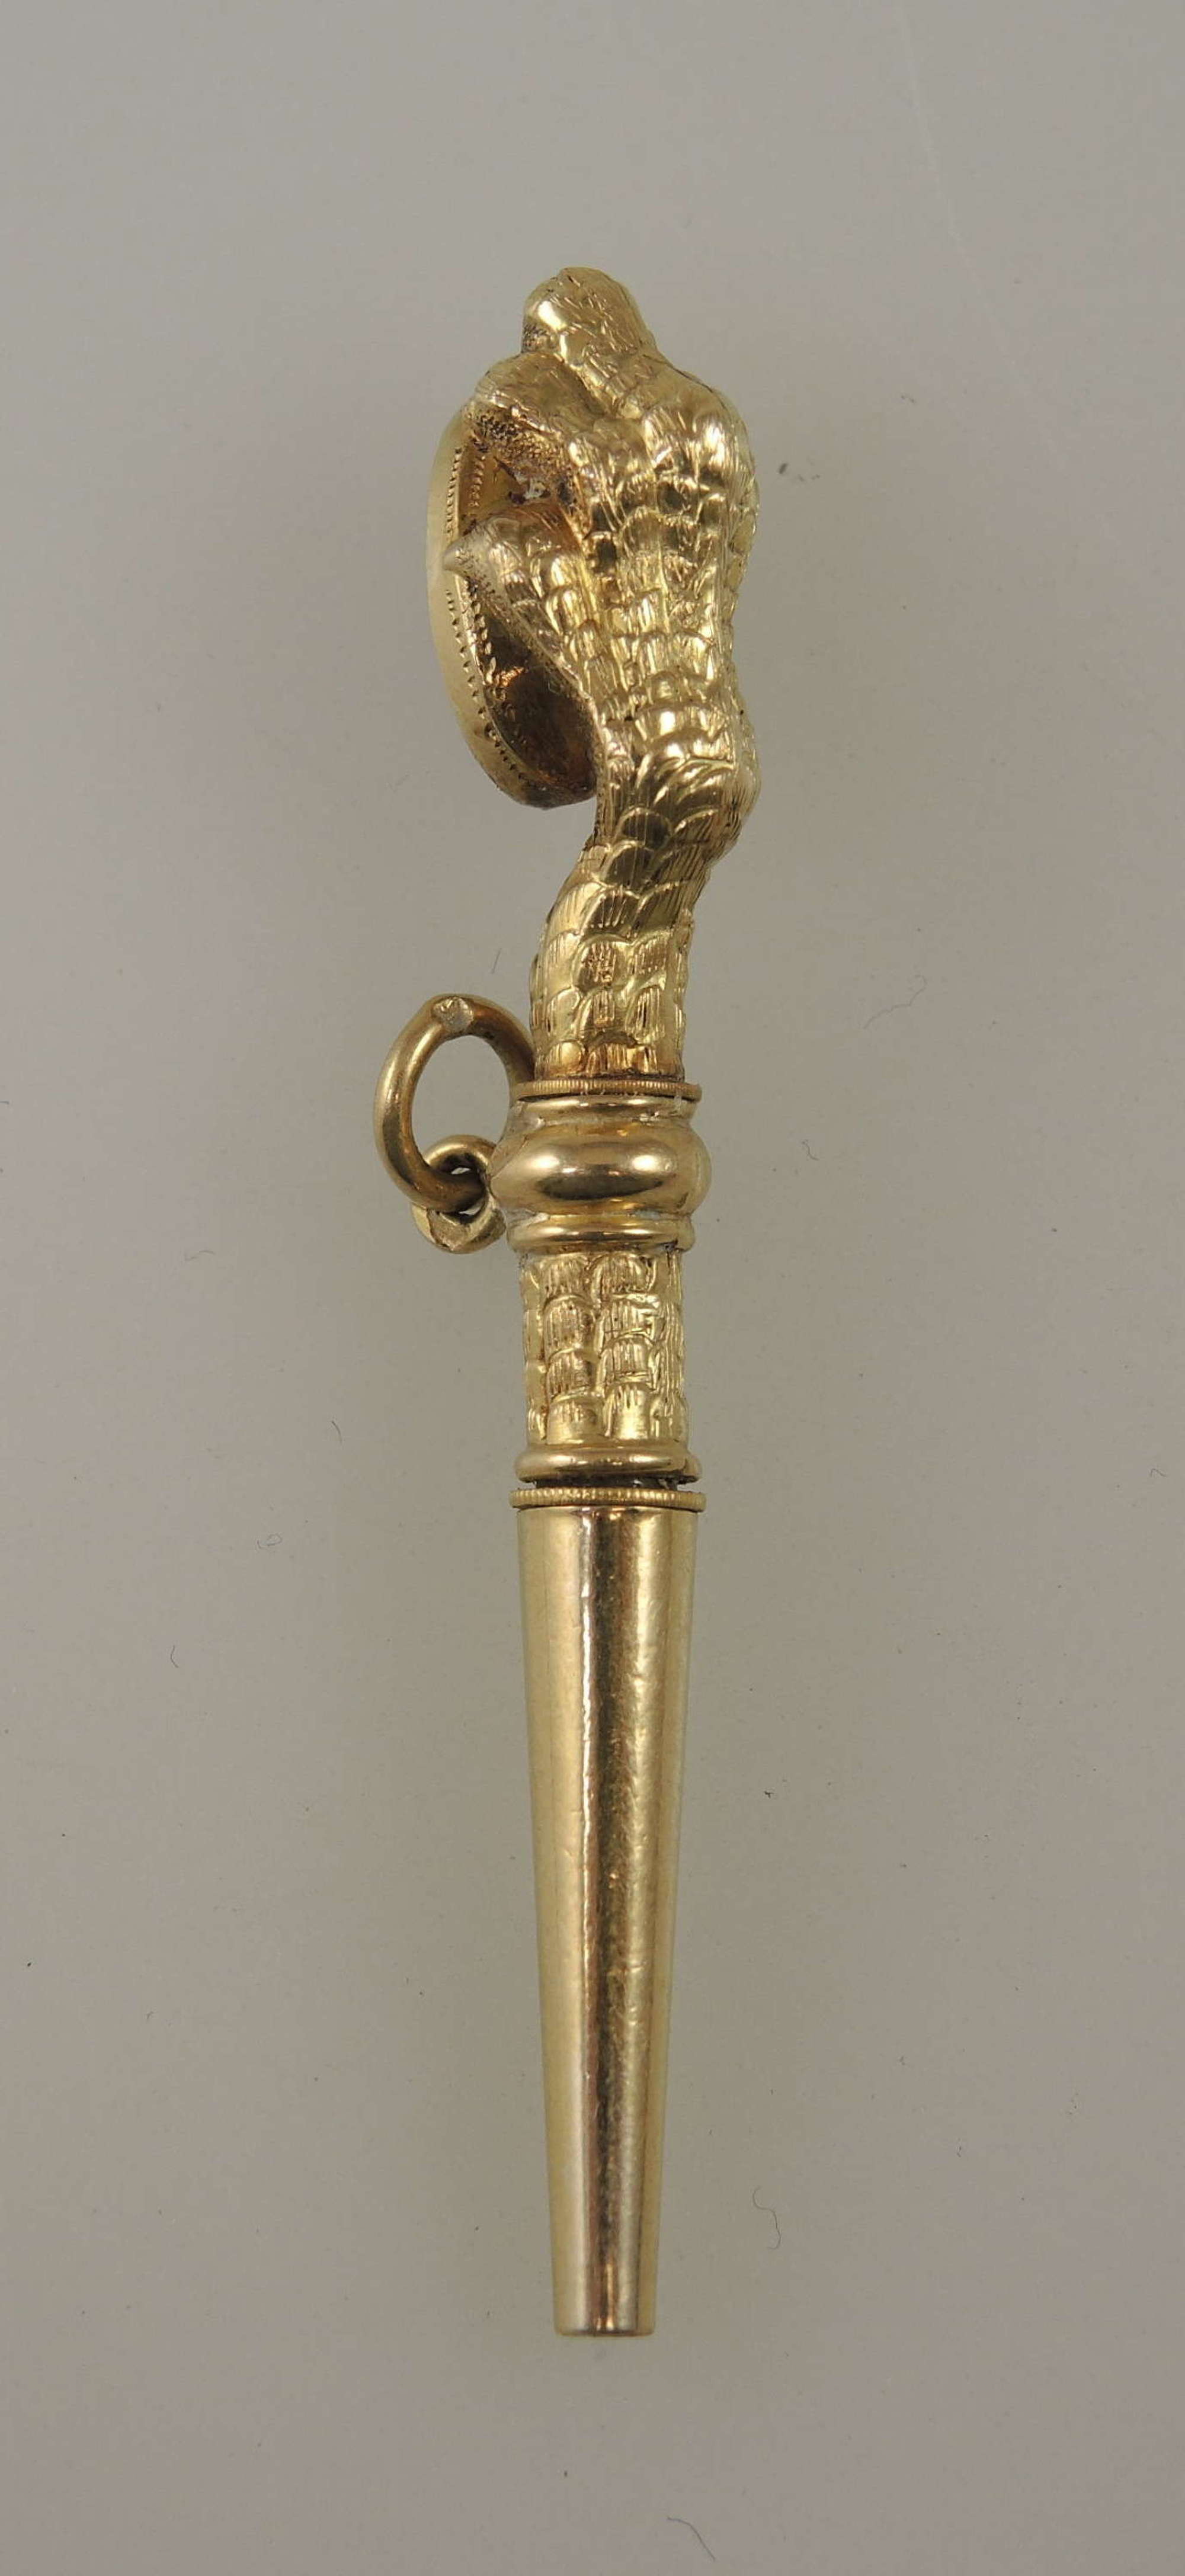 Solid Gold and stone set TALON Breguet pocket watch key c1850